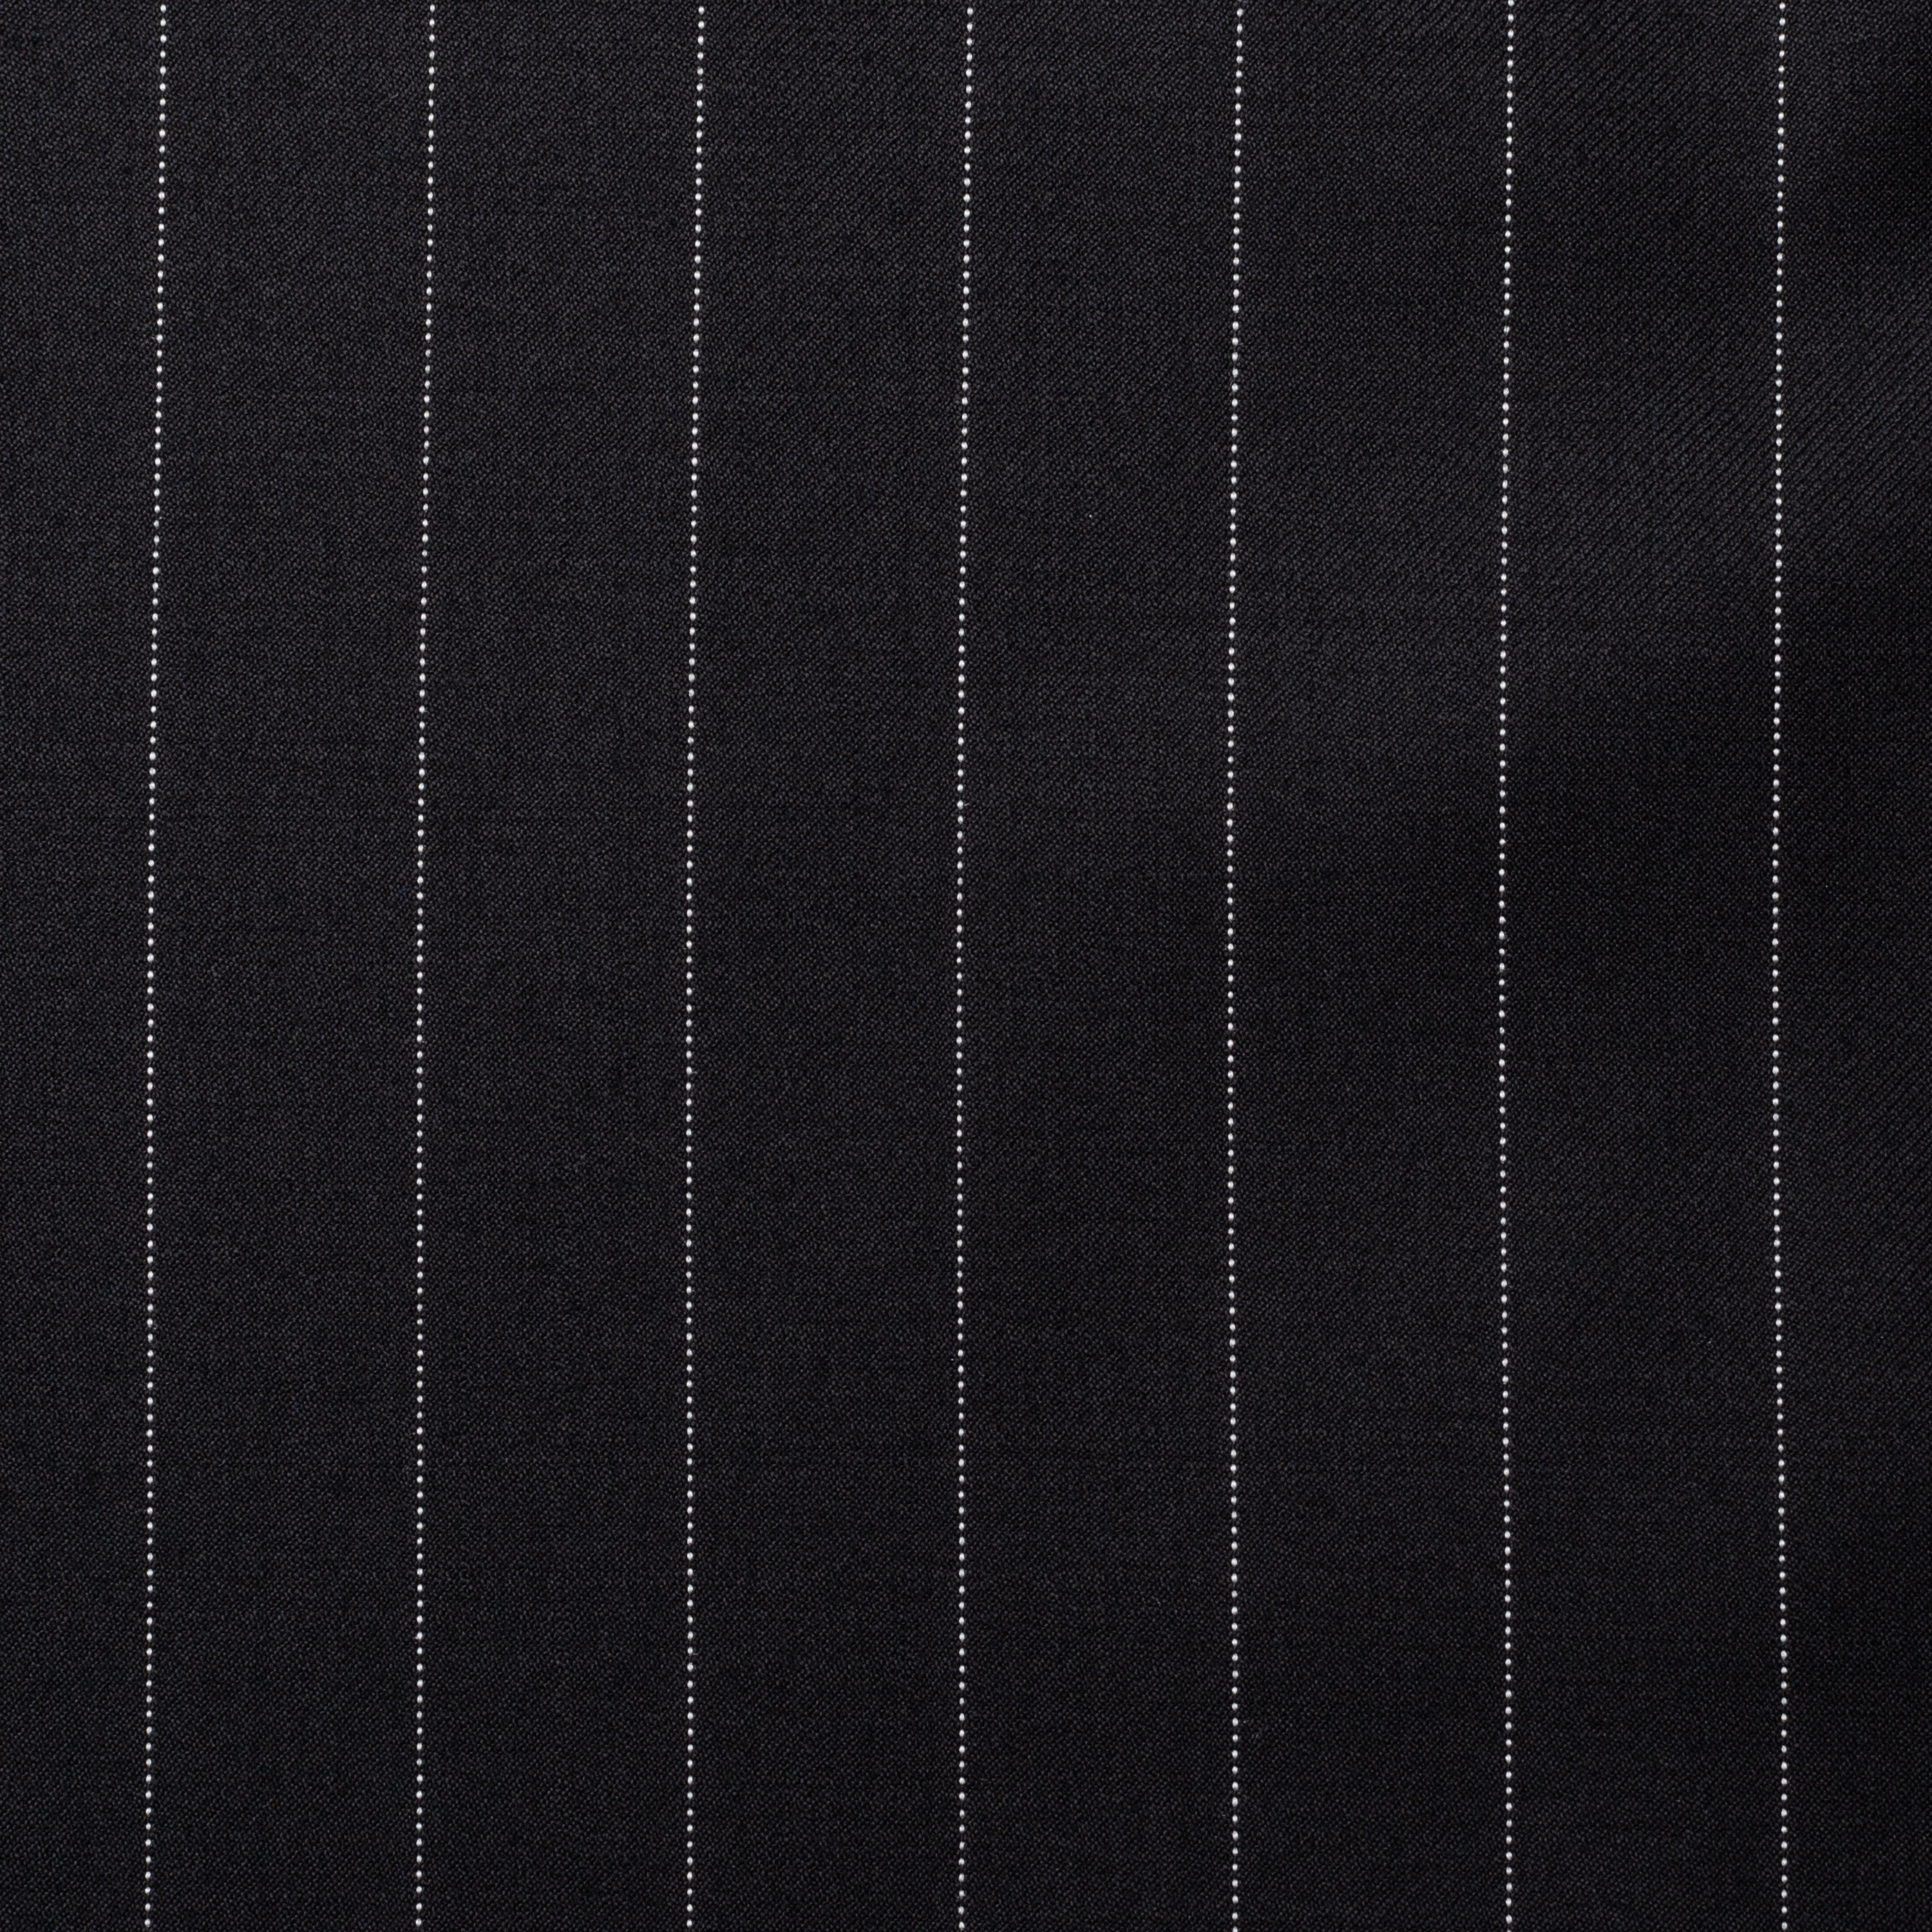 SARTORIA CASTANGIA Black Pin Striped Wool Super 150's Suit EU 52 NEW US 42 CASTANGIA